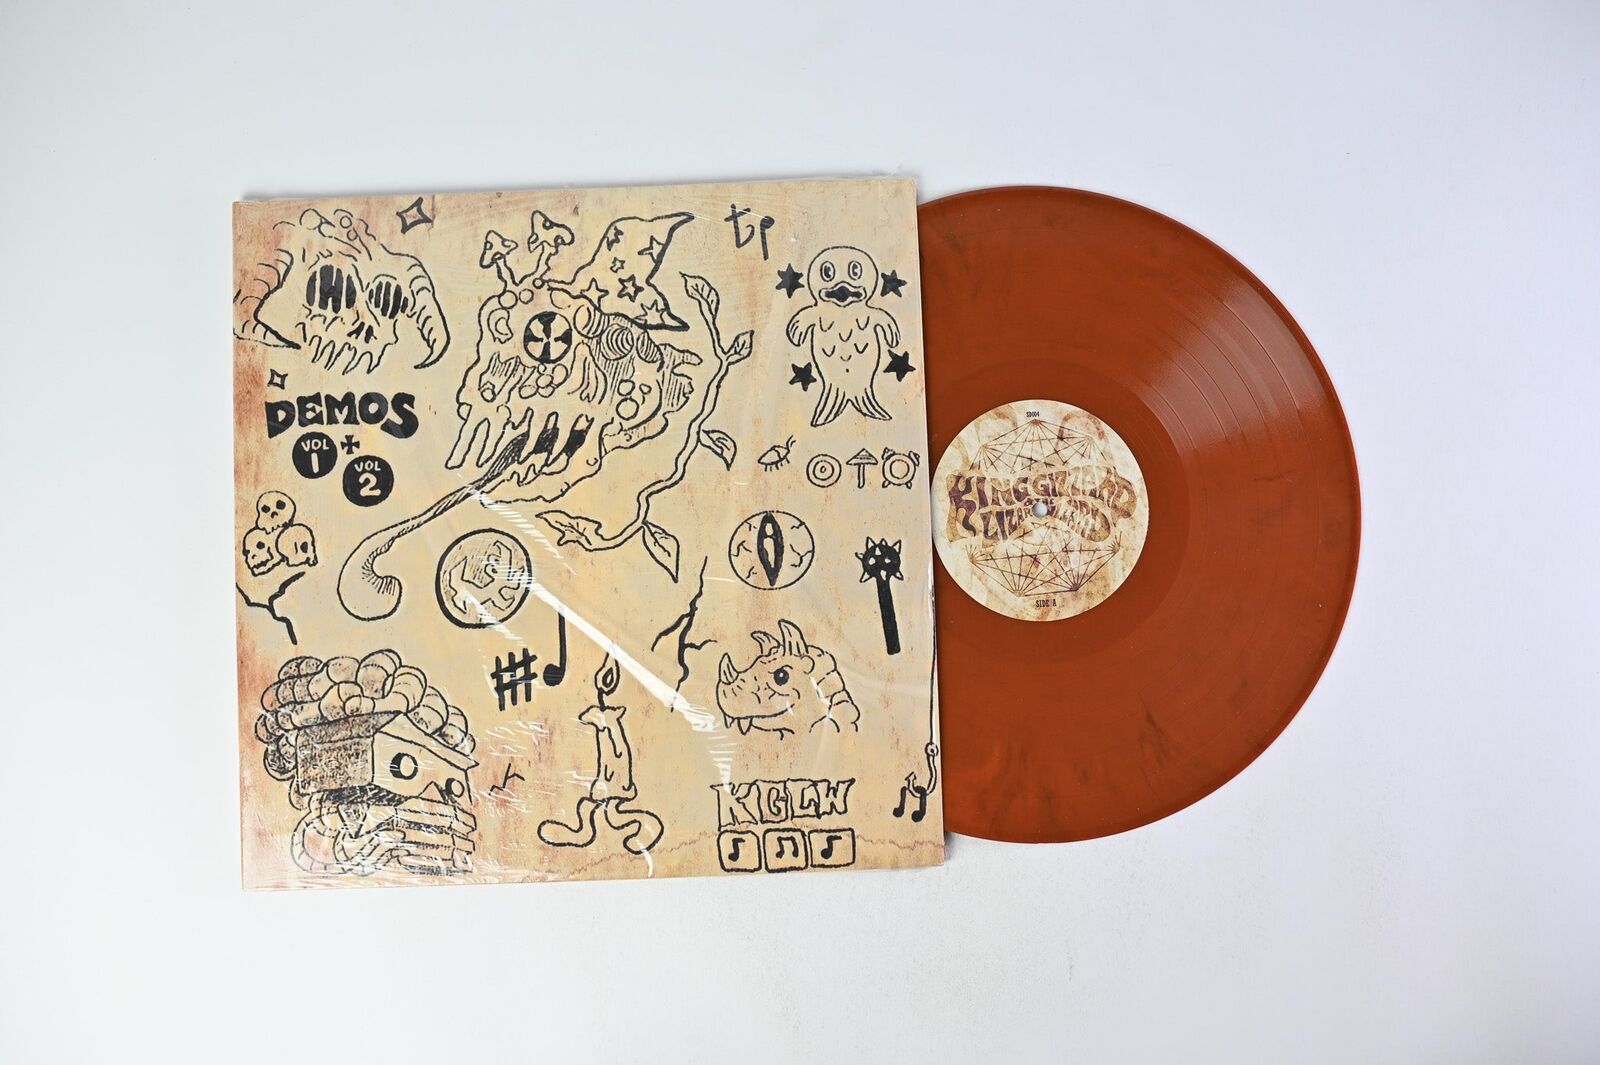 King Gizzard And The Lizard Wizard - Demos Vol. 1 + Vol. 2 on  Orange Vinyl